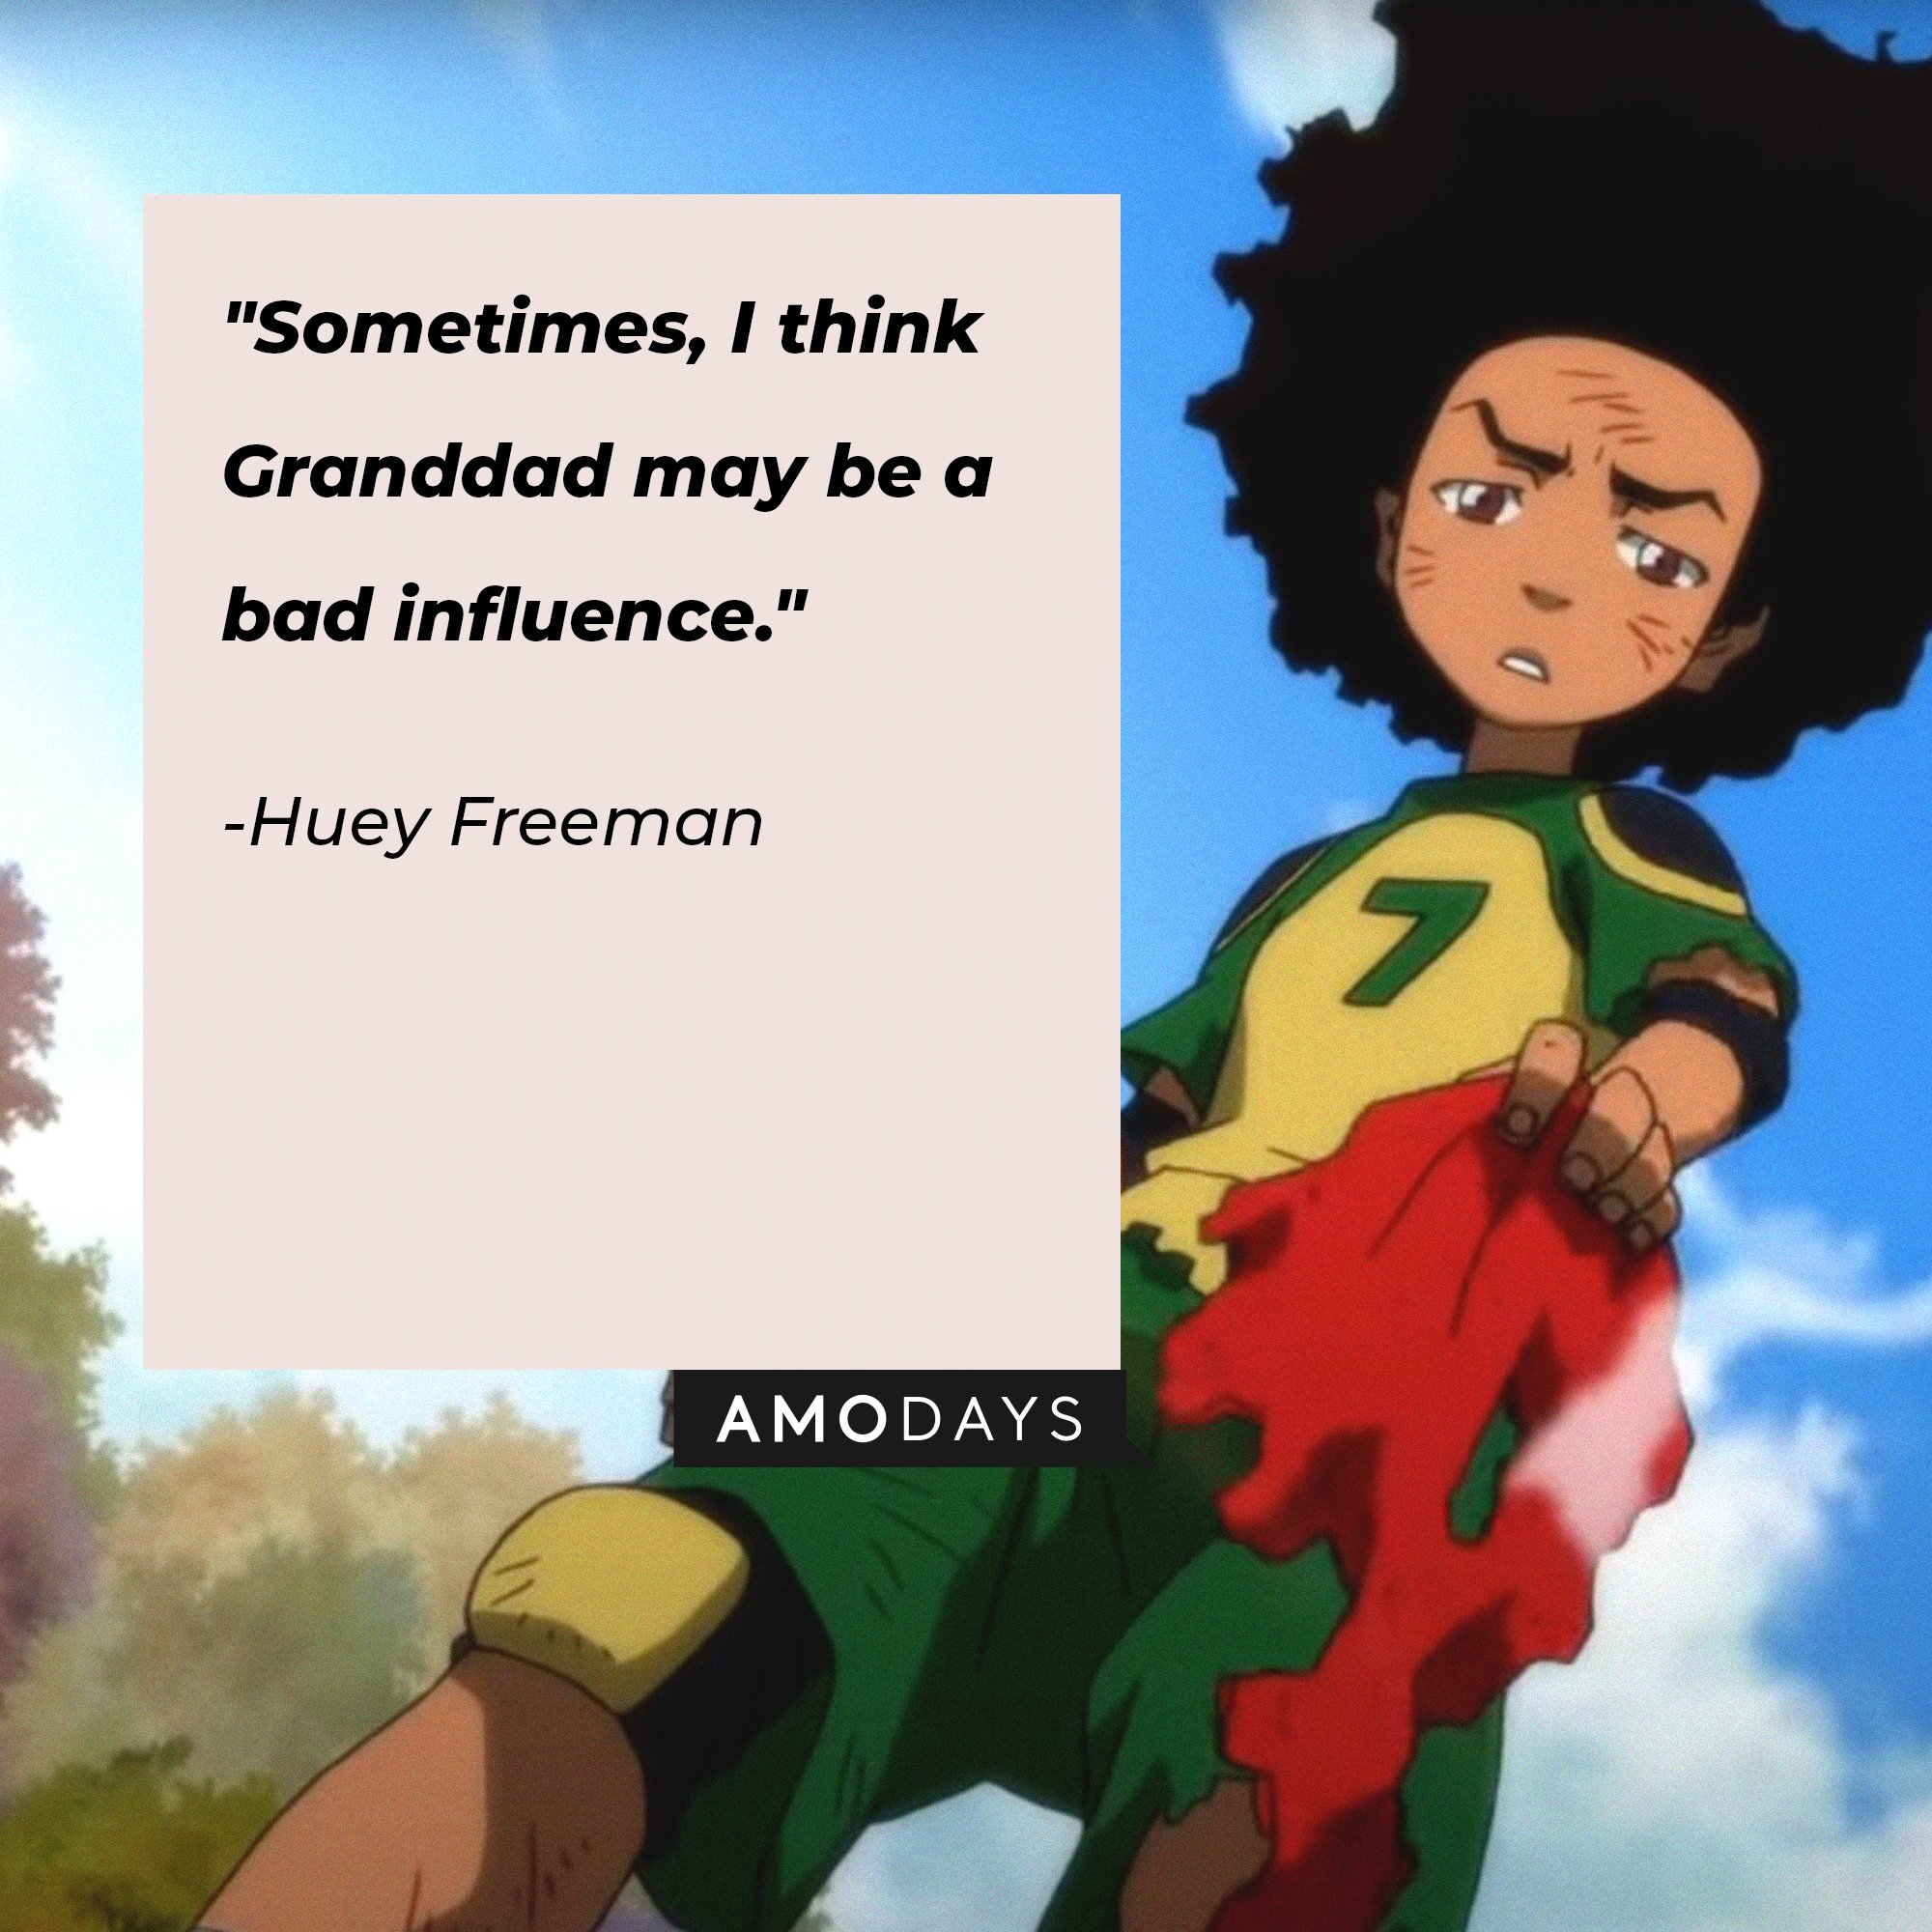 Huey Freeman's quote: "Sometimes, I think Granddad may be a bad influence." | Image: AmoDays